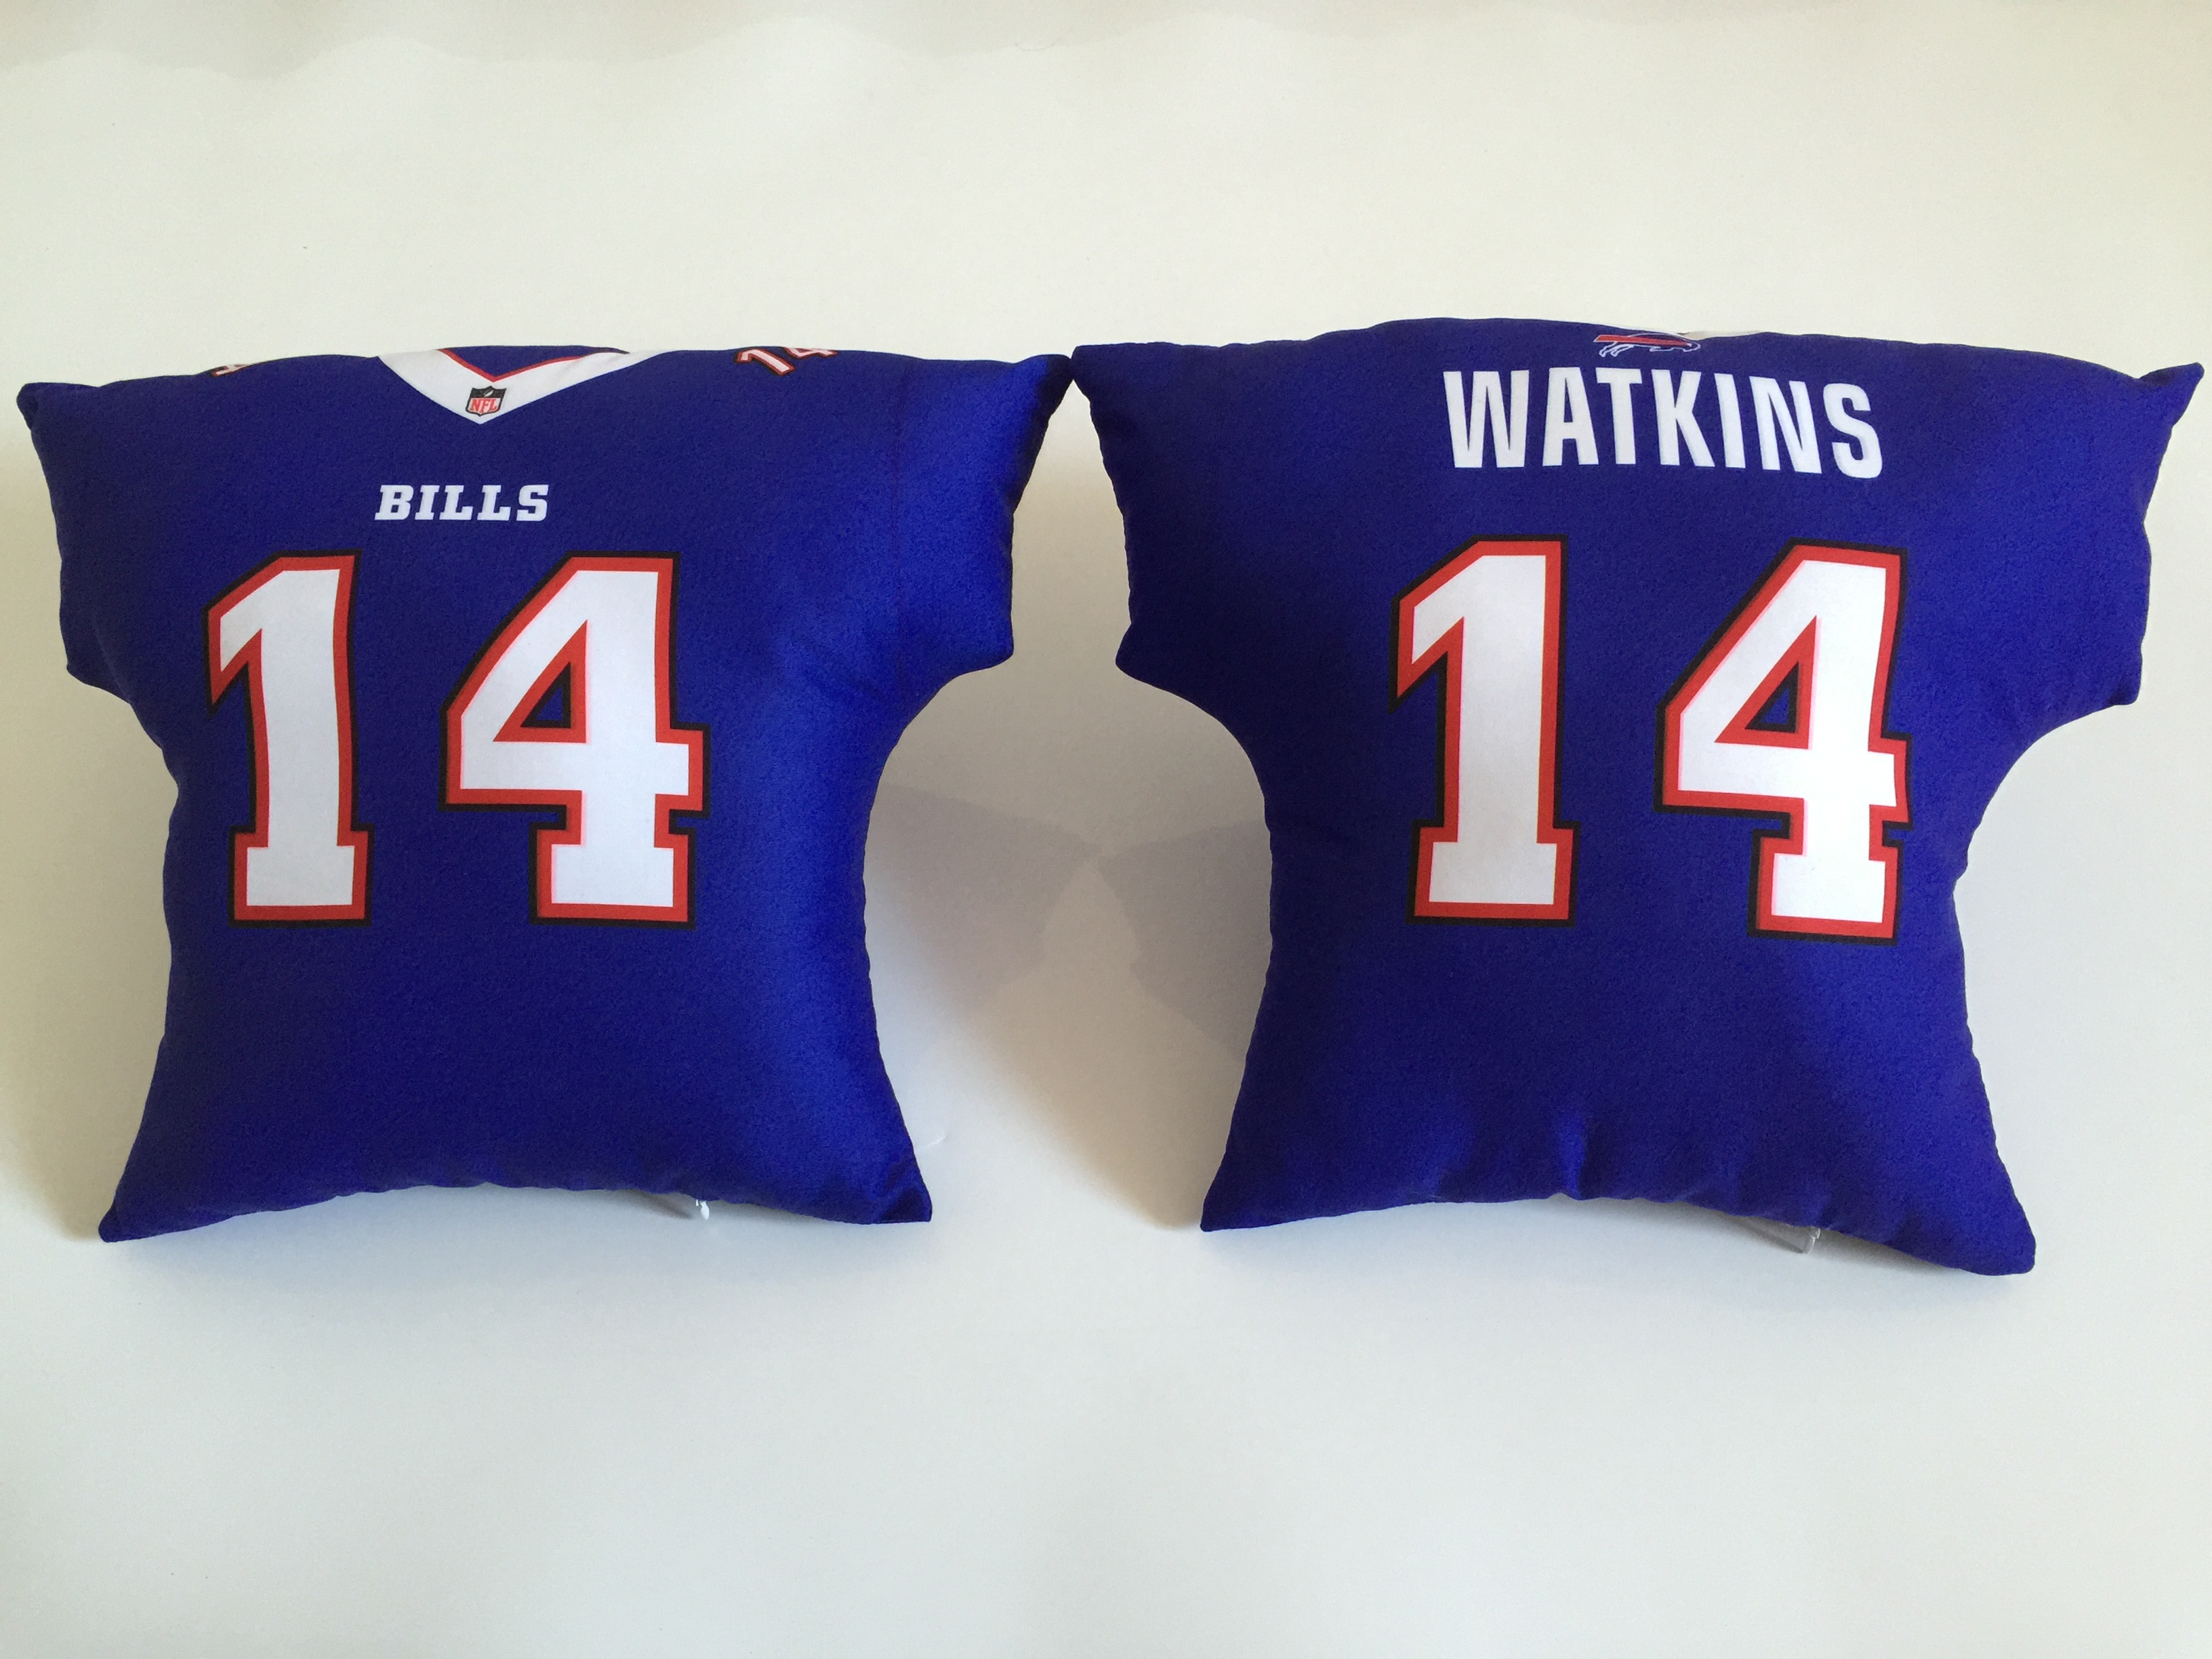 Buffalo Bills 14 Sammy Watkins Royal NFL Pillow - Click Image to Close